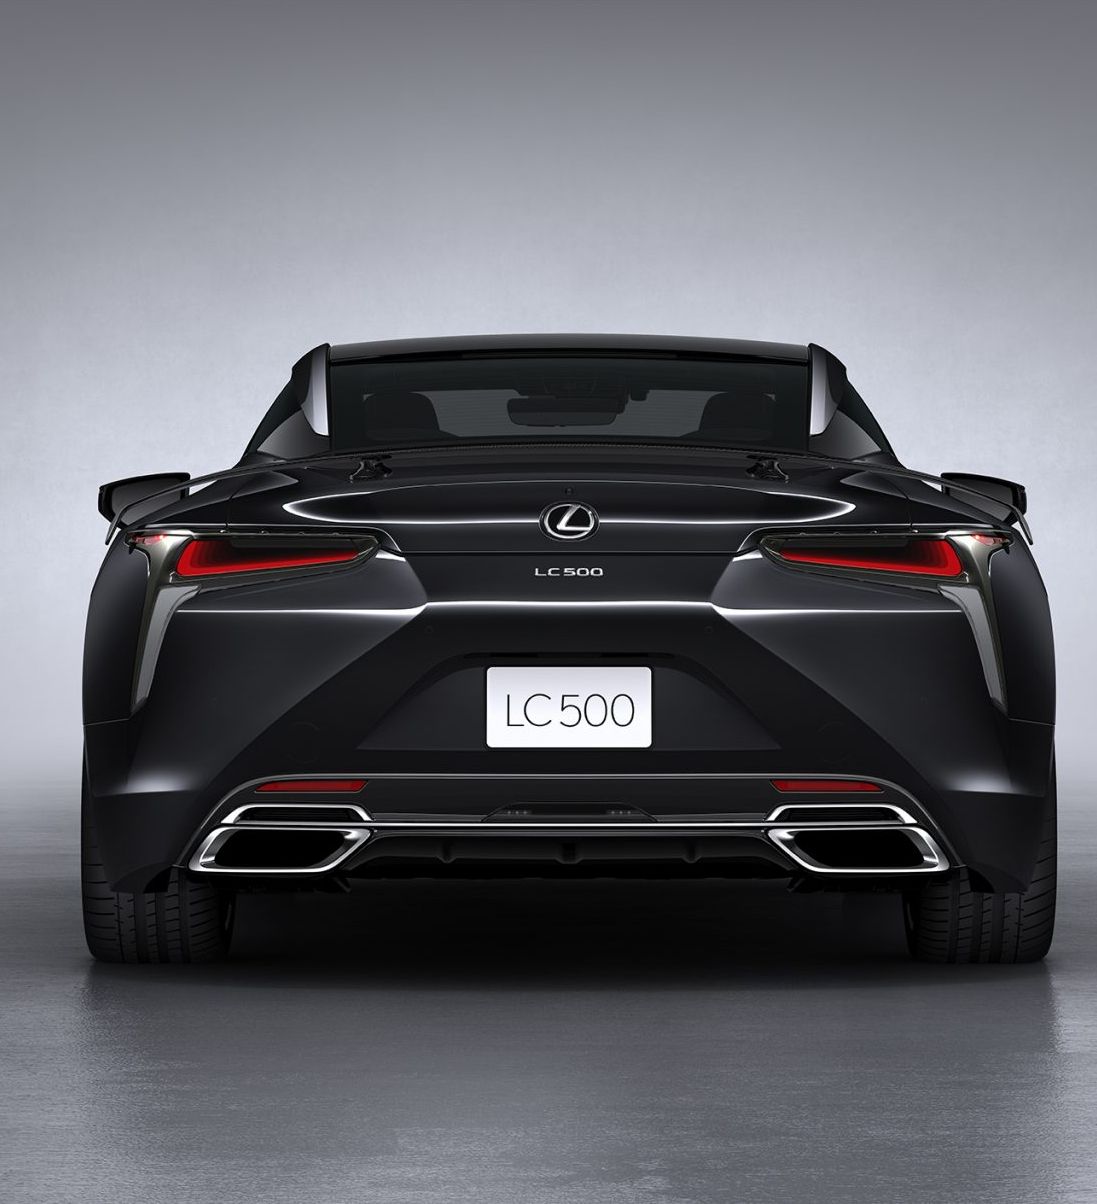 2022 Lexus LC Black Inspiration